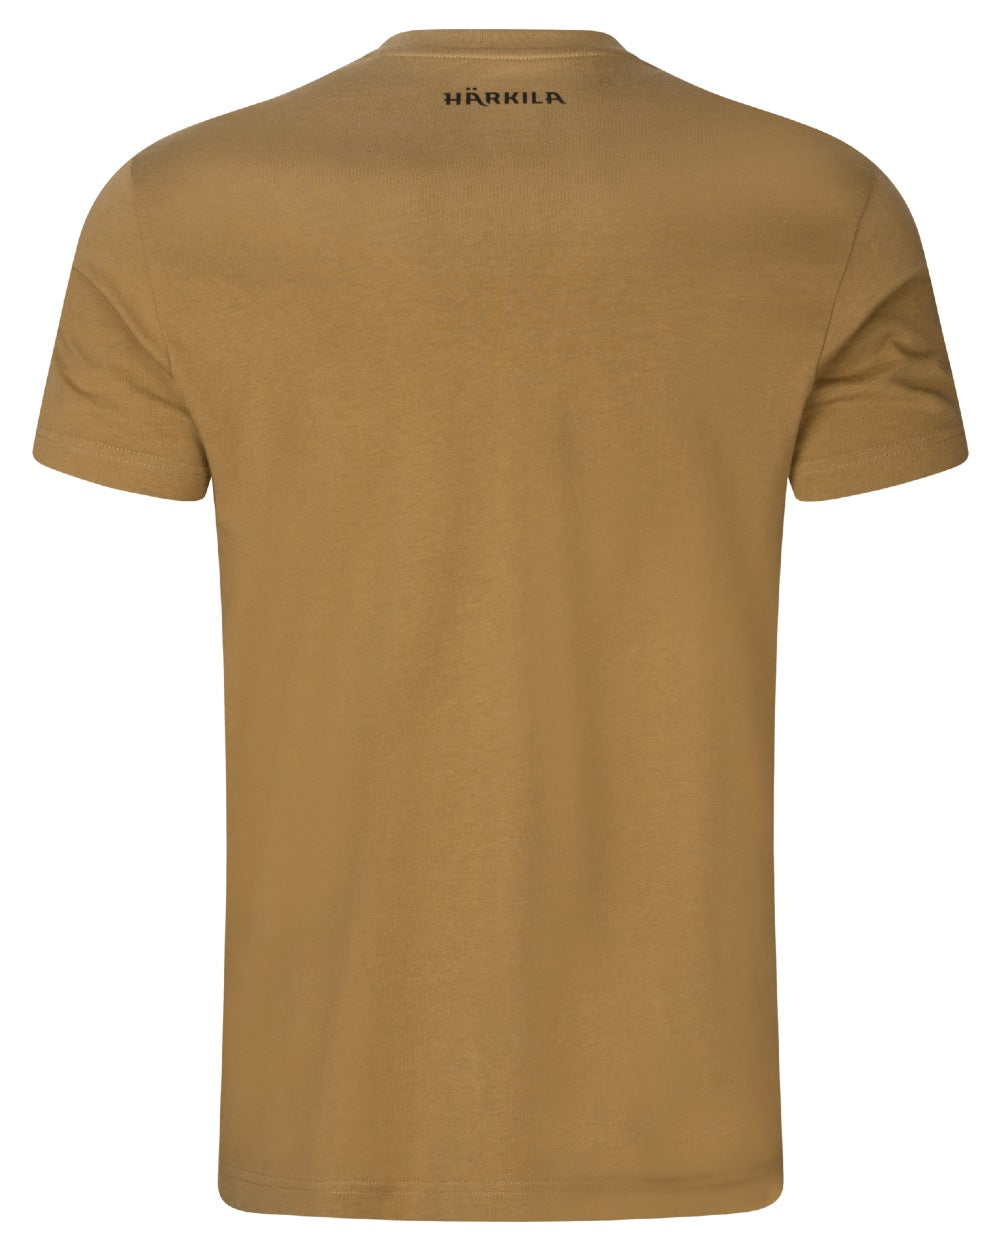 Golden Brown coloured Harkila Impact Short Sleeve T-Shirt on white background 